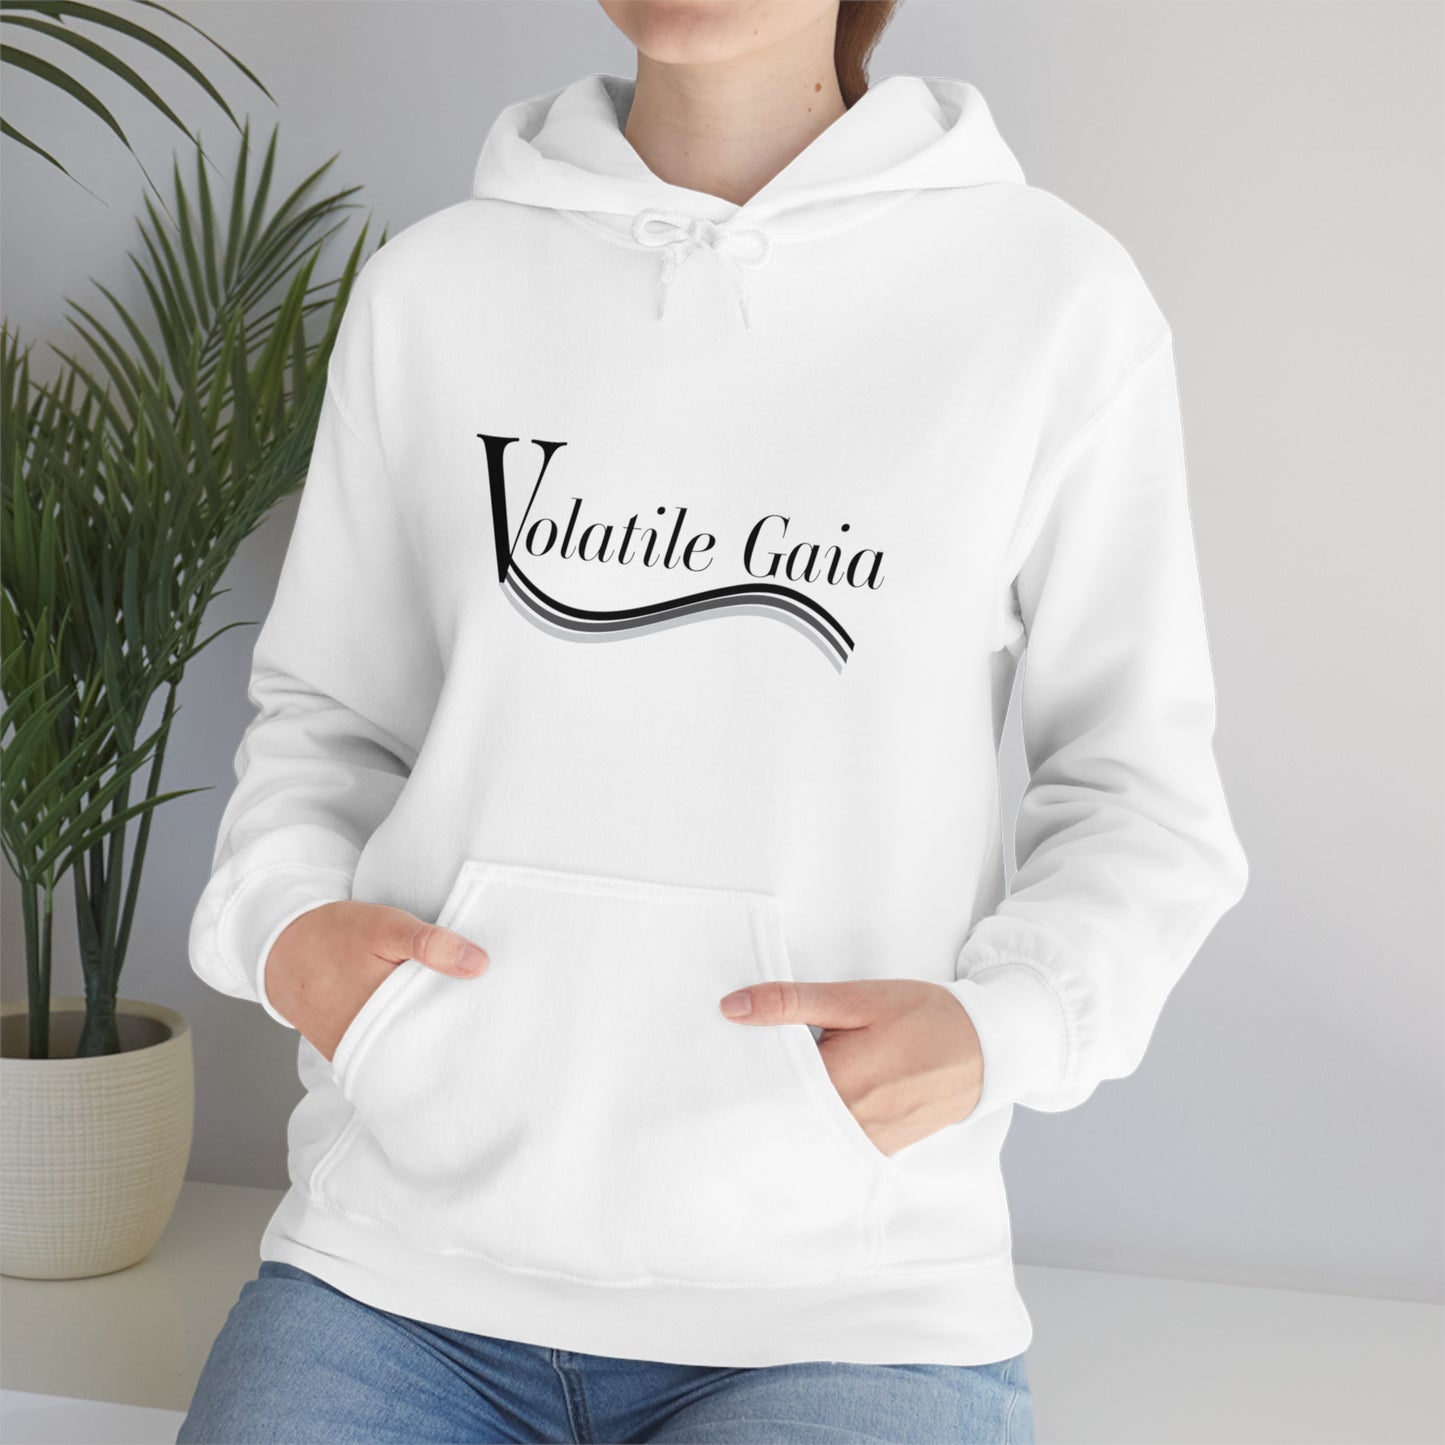 Volatile Gaia Sweatshirt